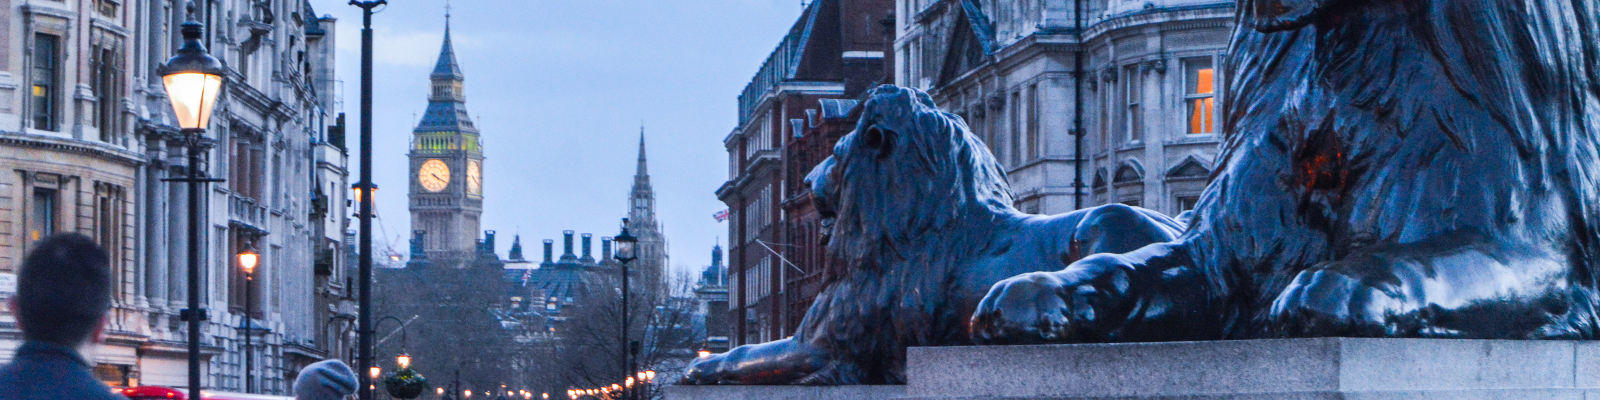 lions in trafalgar square london at dusk